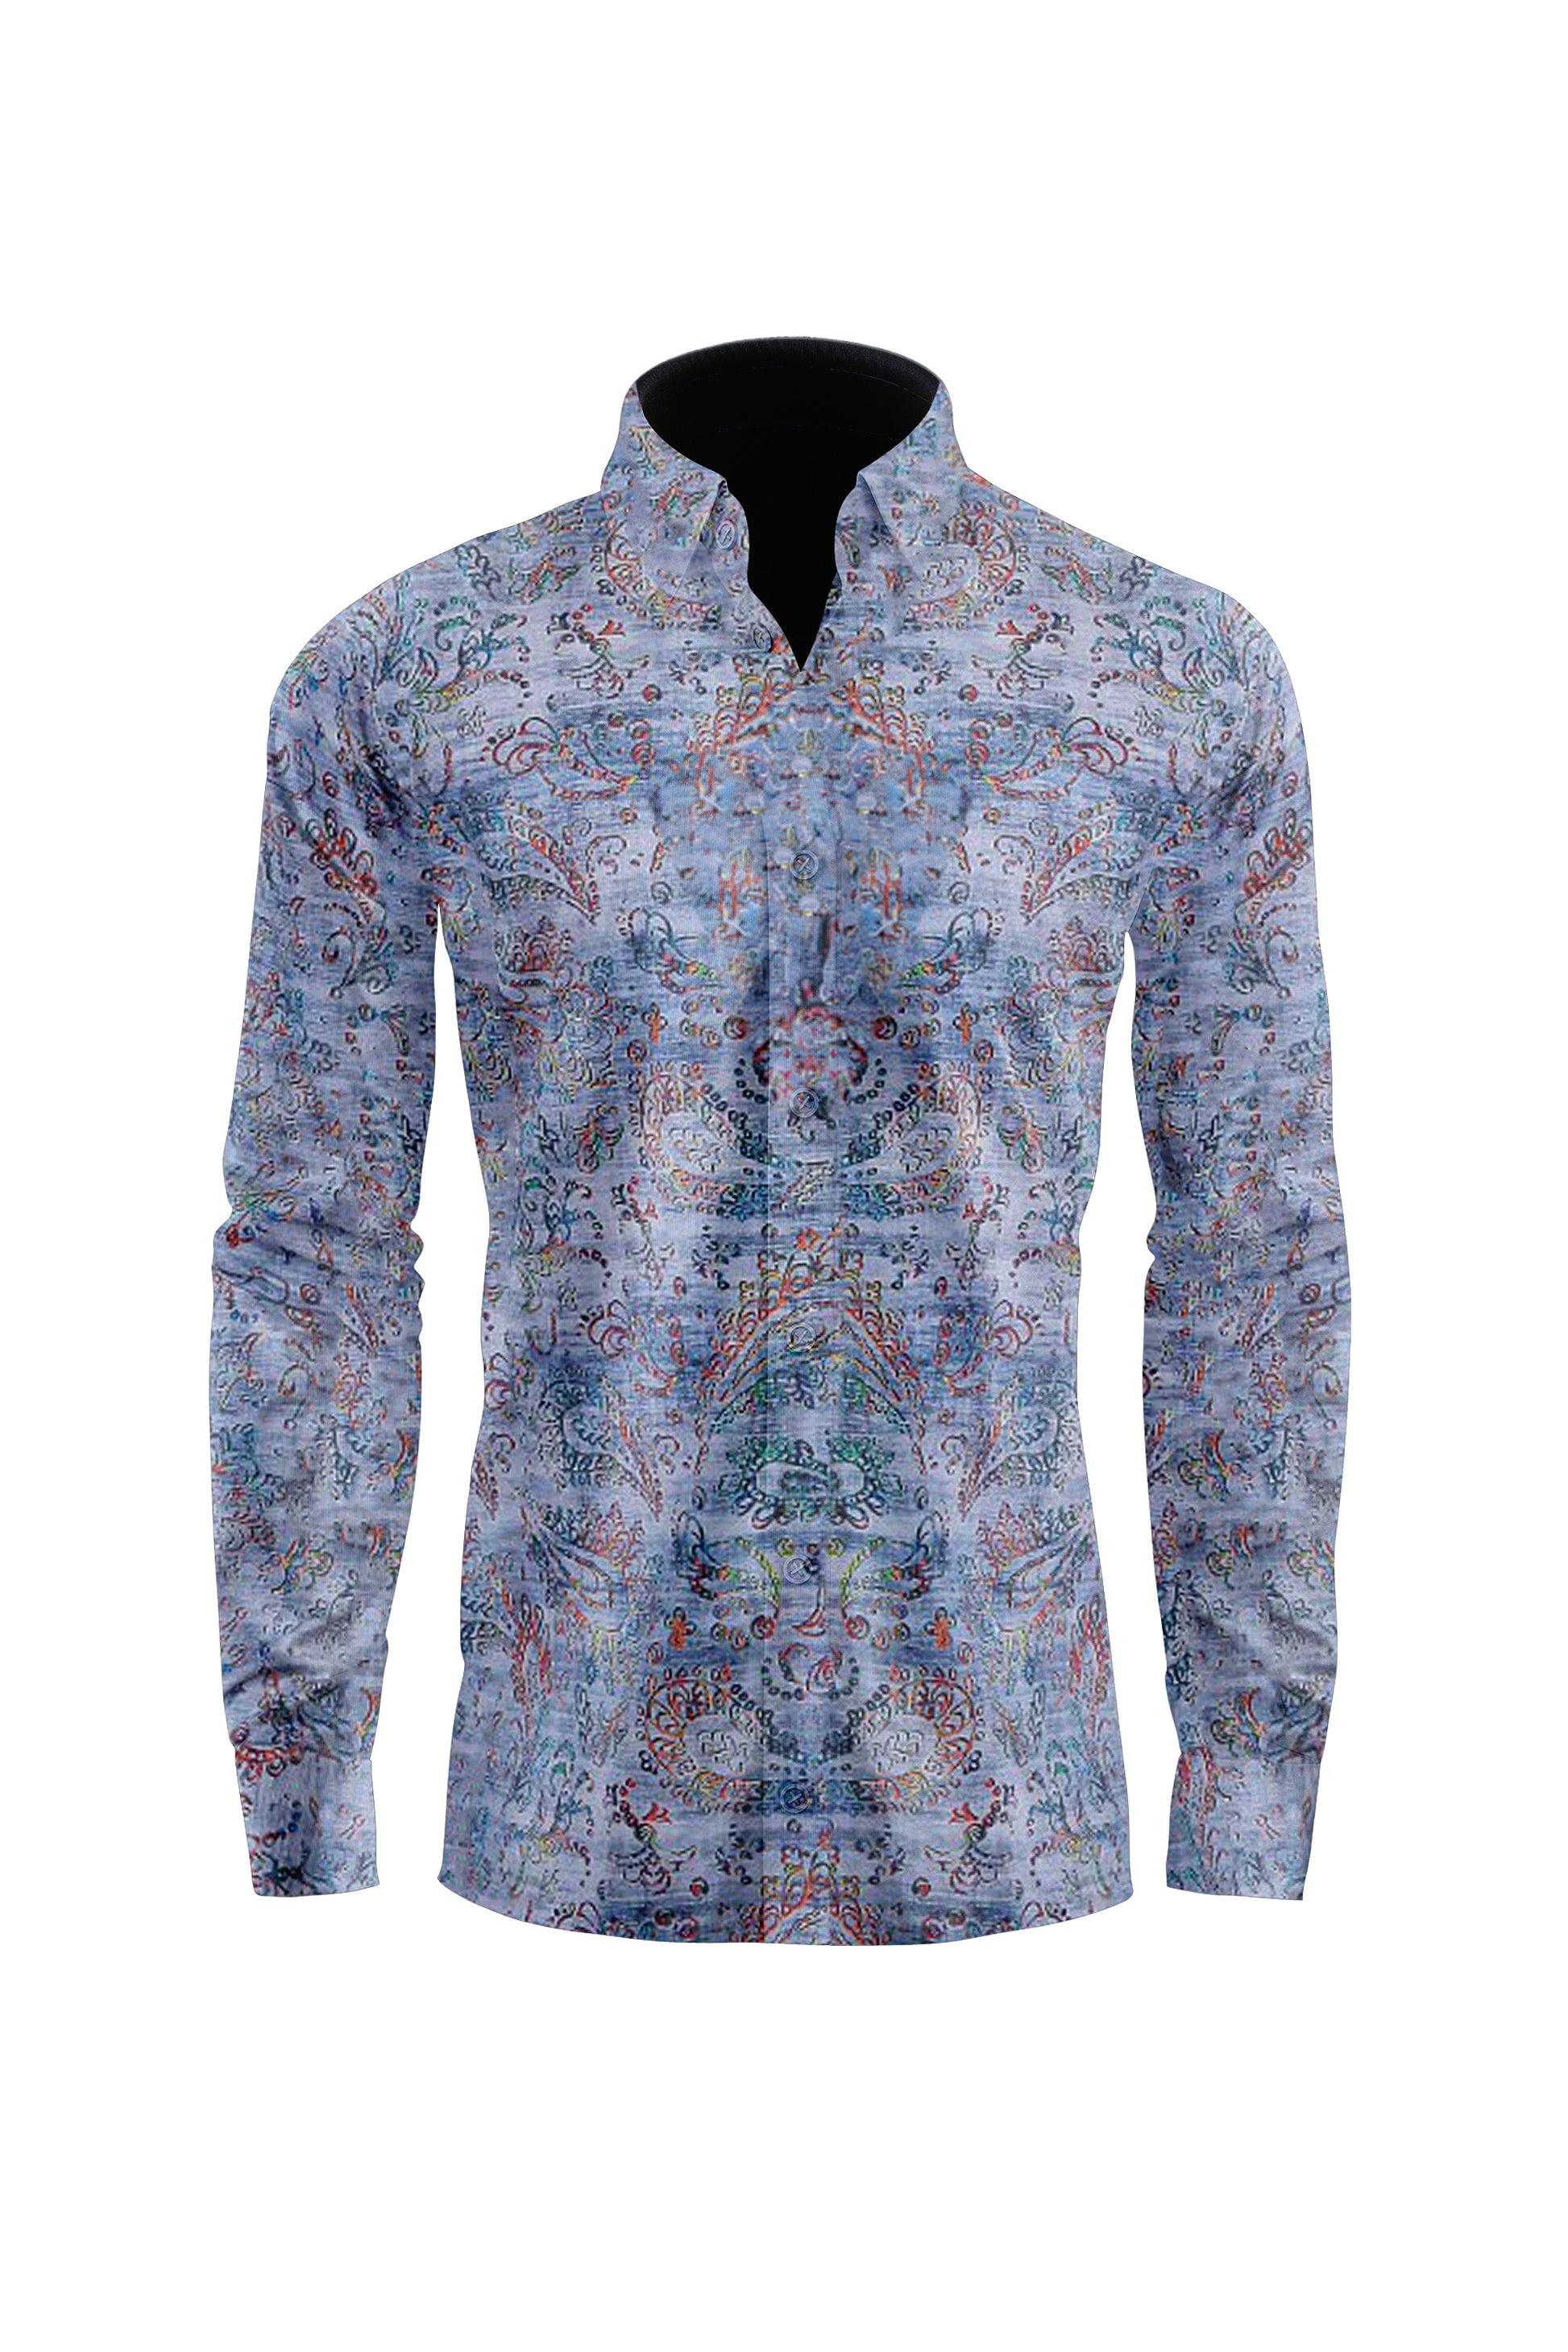 Light Blue Shirt With RAINBOW Paisley CASUAL SHIRT On Sale 30% Off Vercini